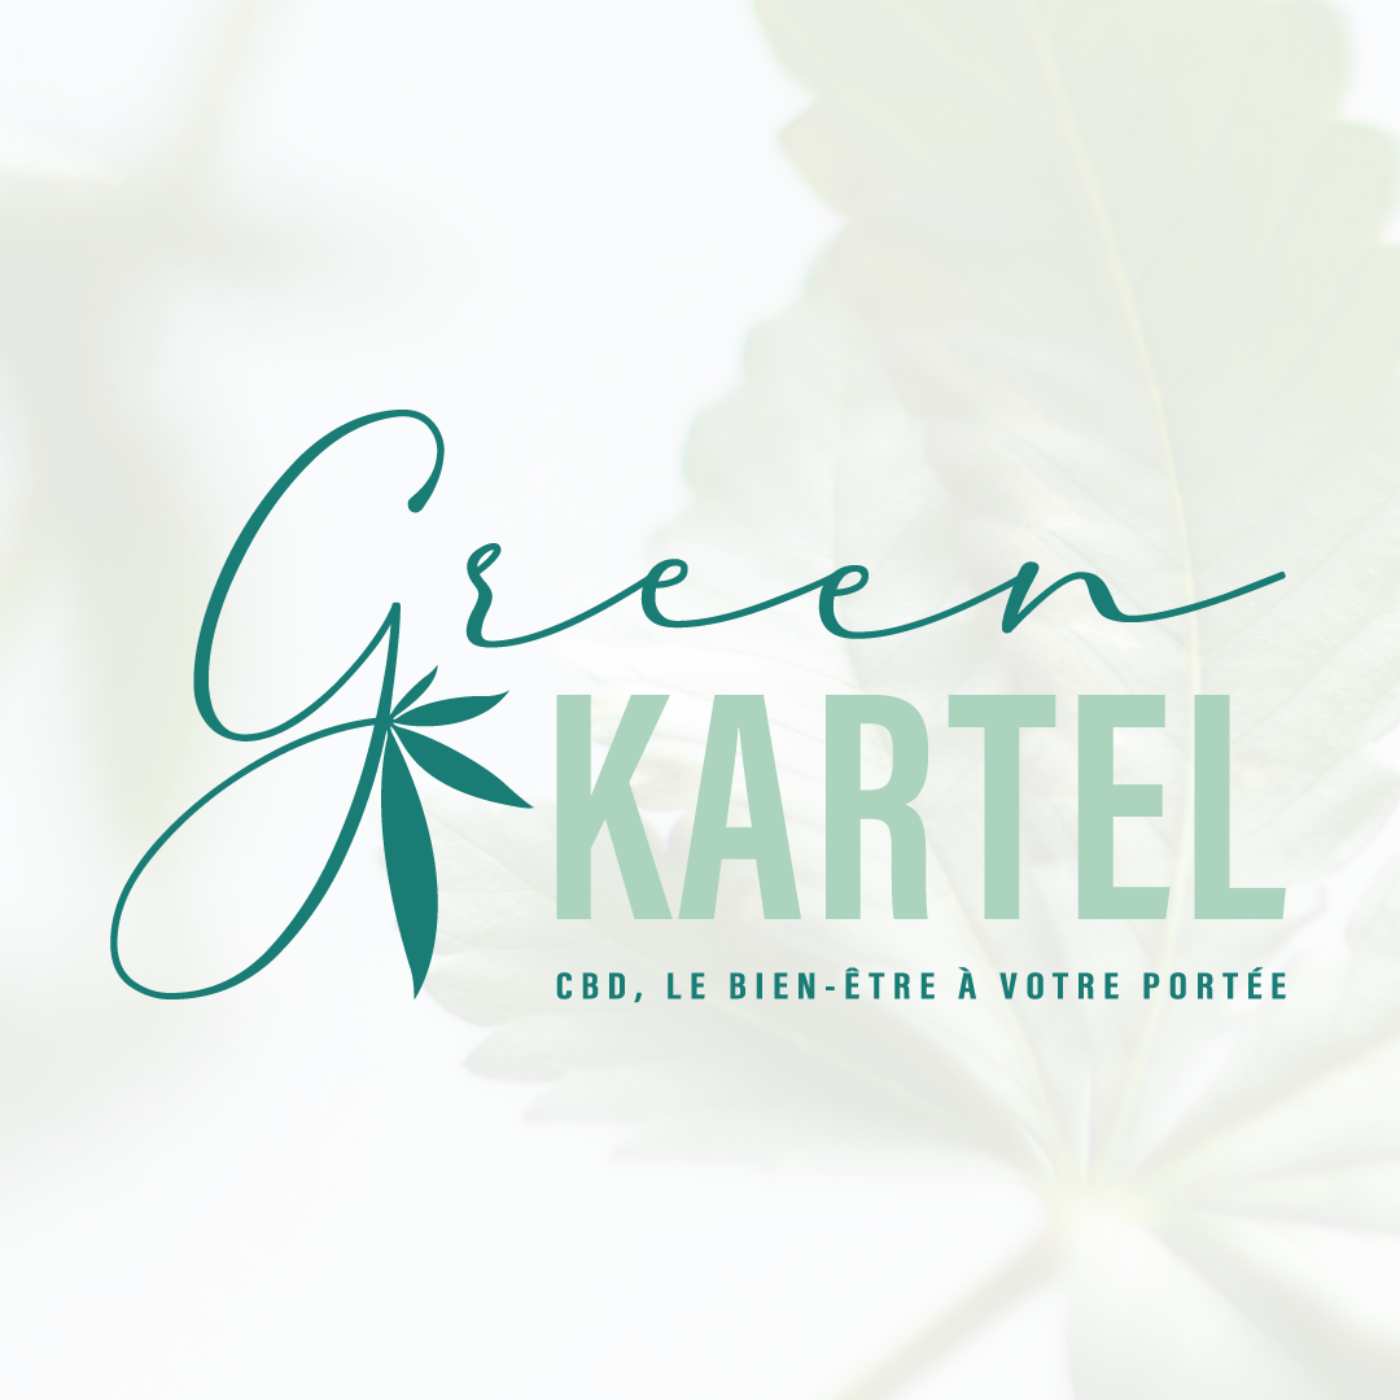 logo green kartel 